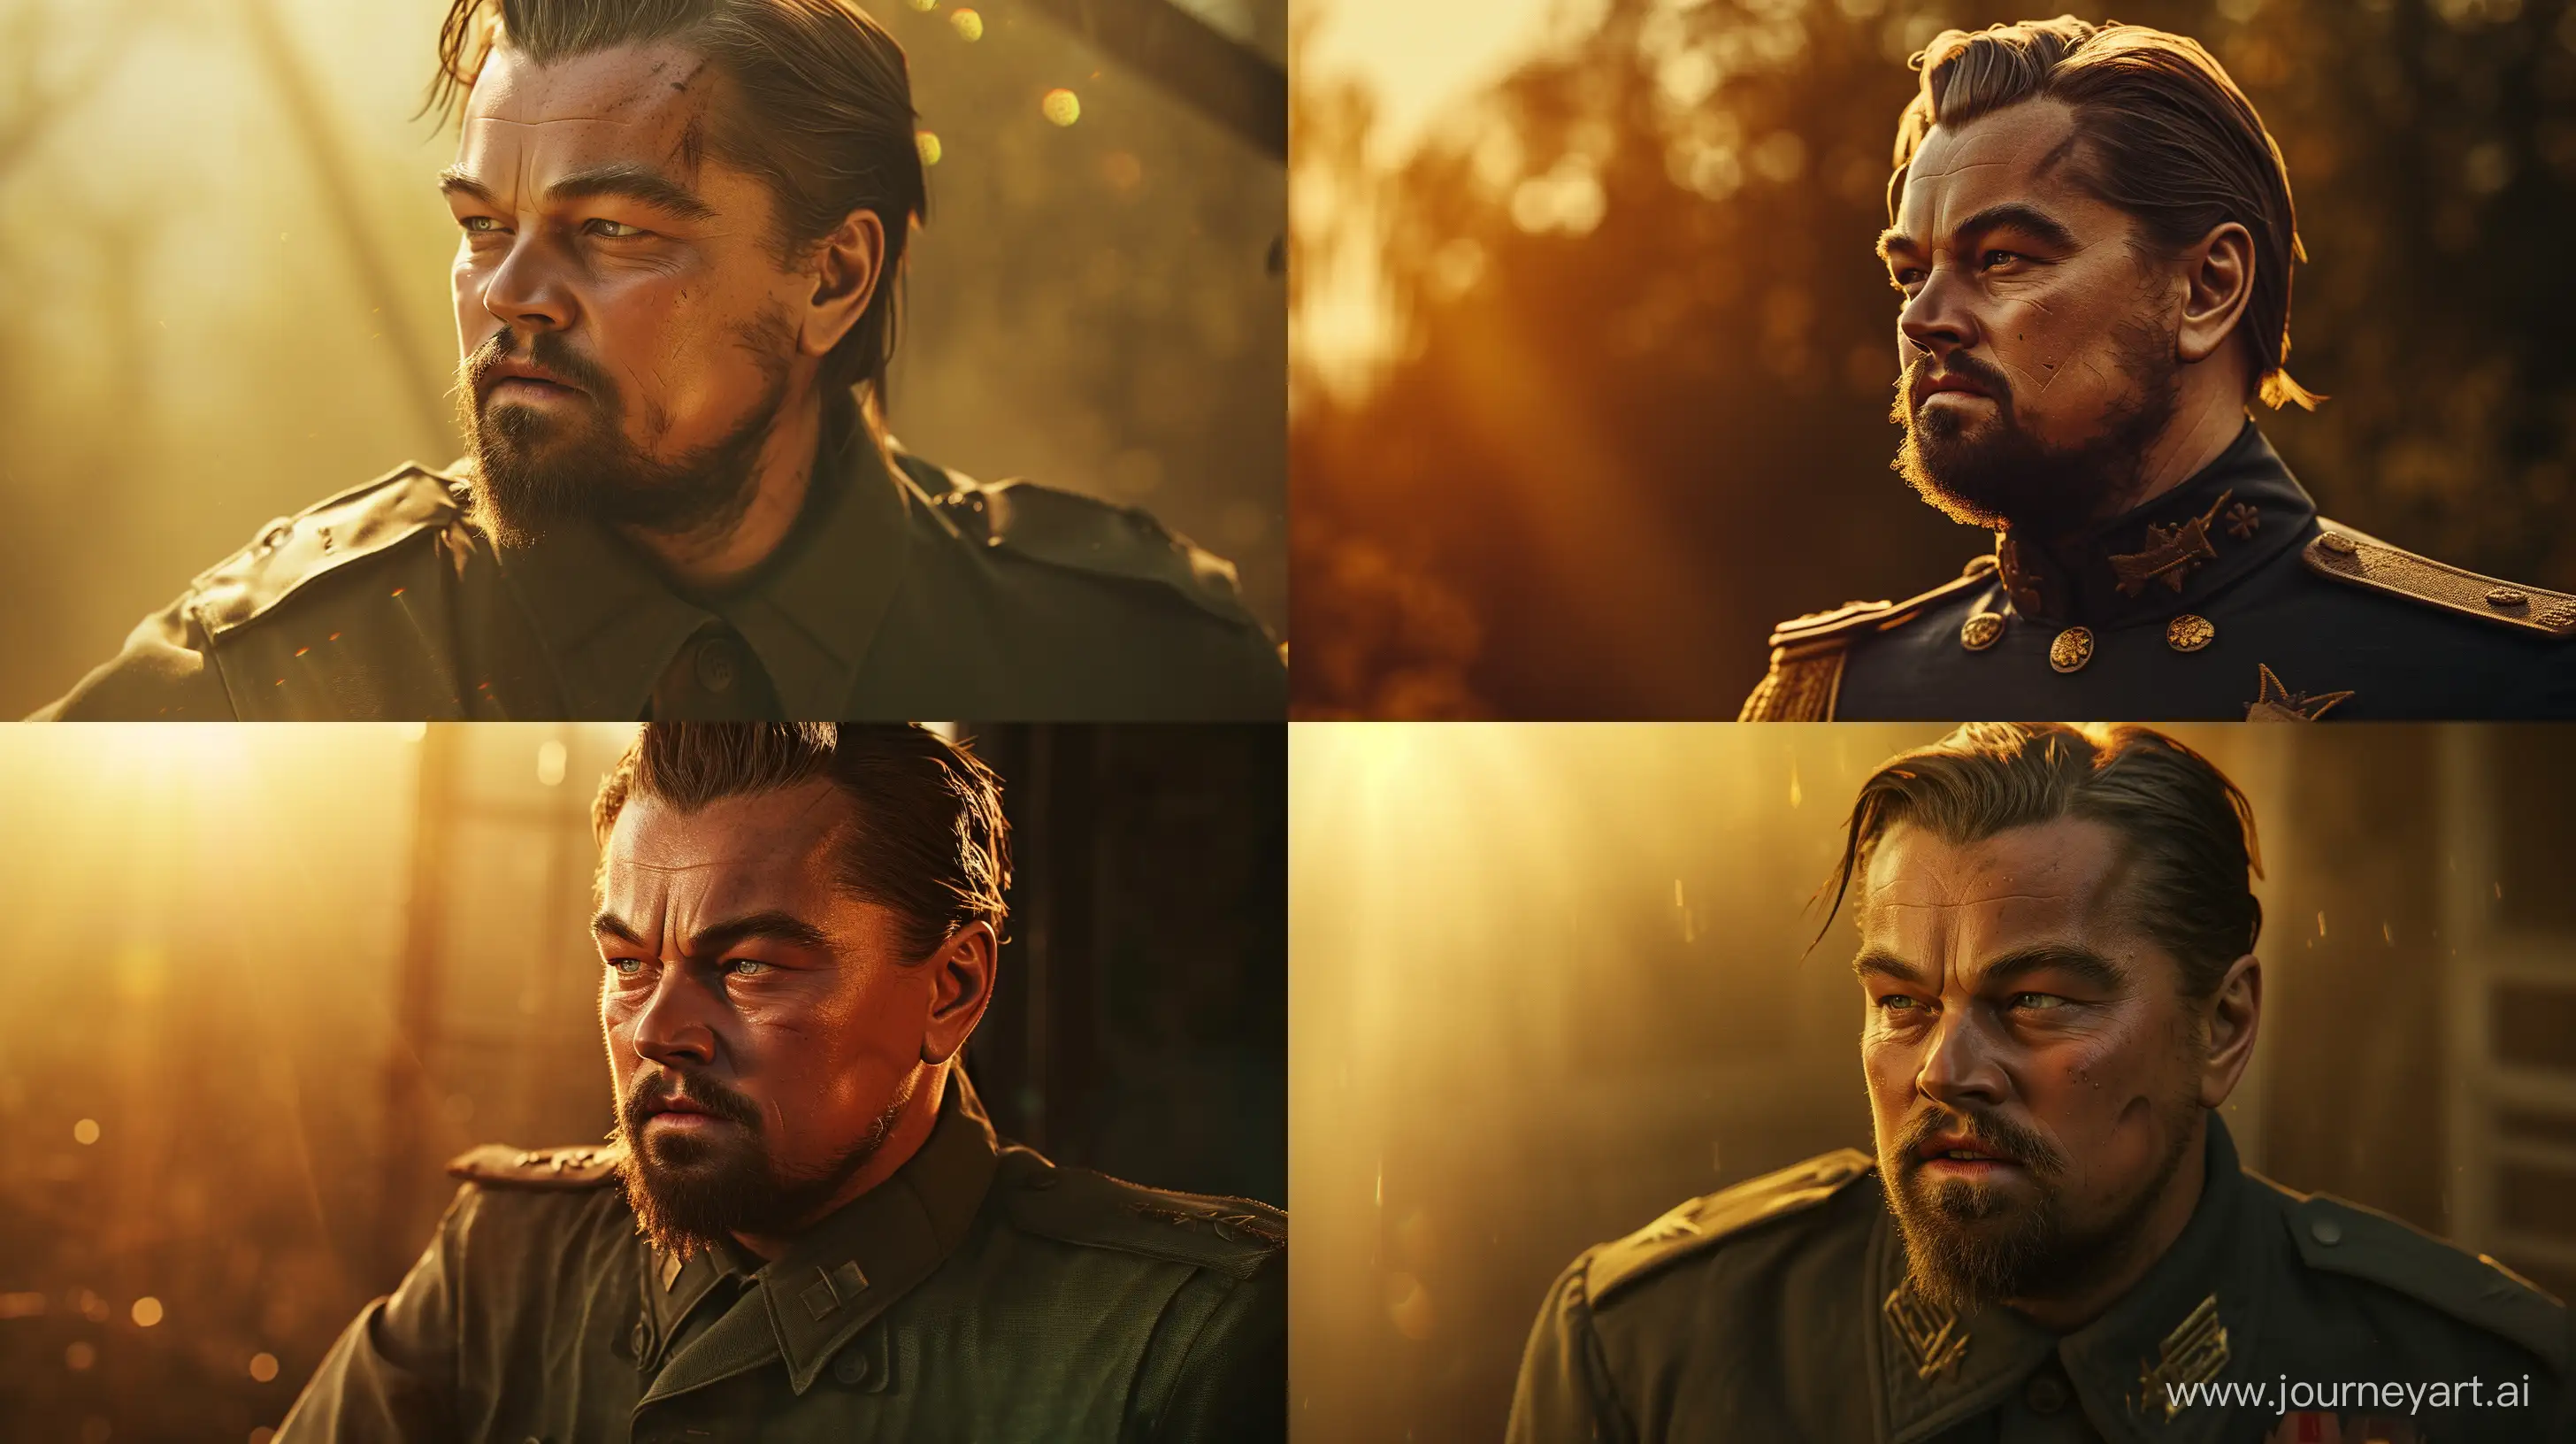 Creepy-Military-Movie-Poster-Leonardo-DiCaprio-in-Medium-Shot-with-Realistic-Sunlight-Reflections